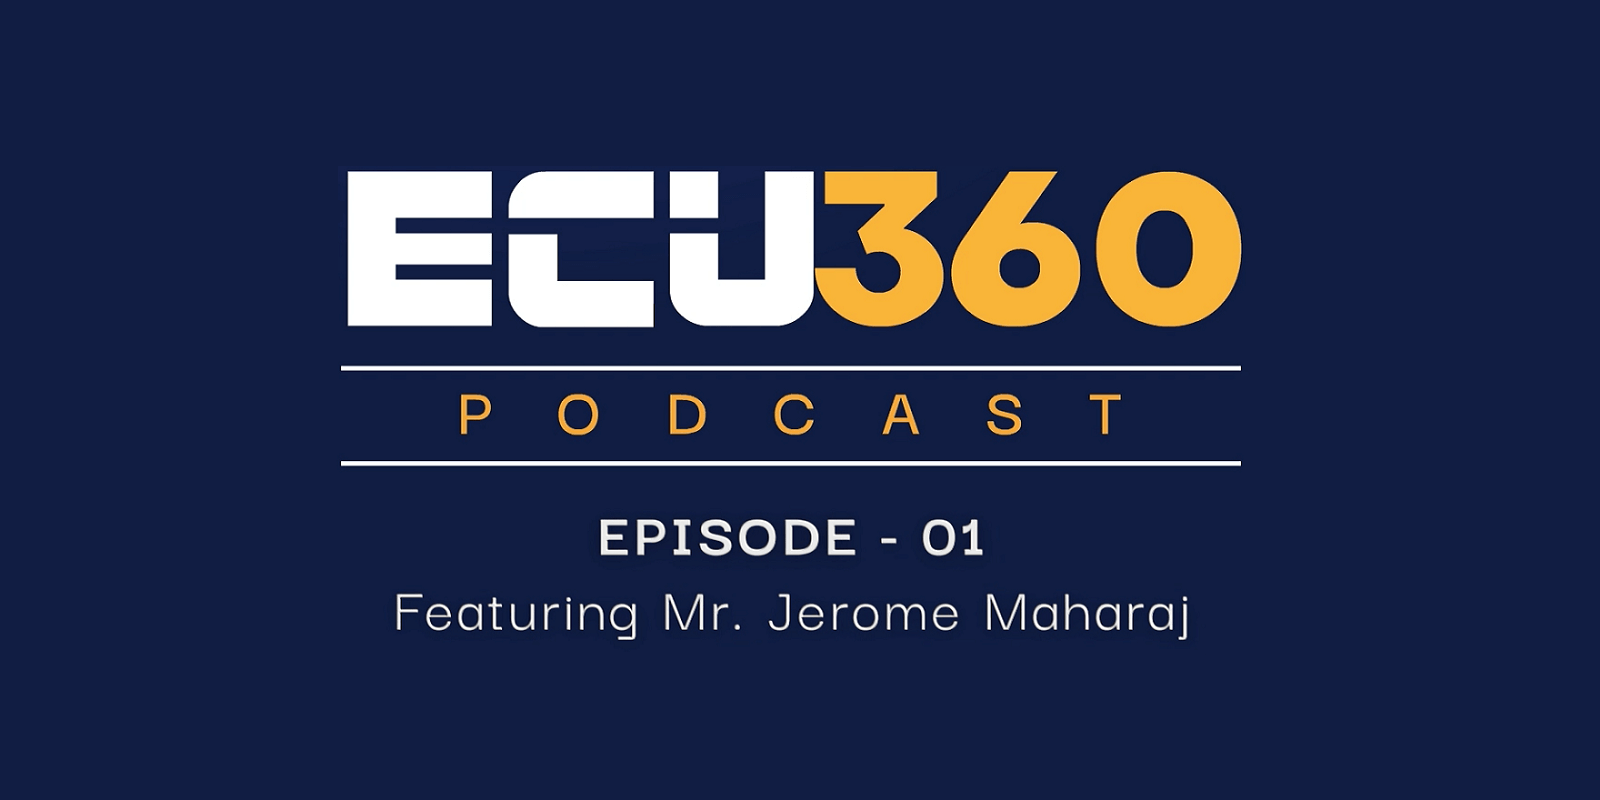 ECU360 podcast Episode - 01